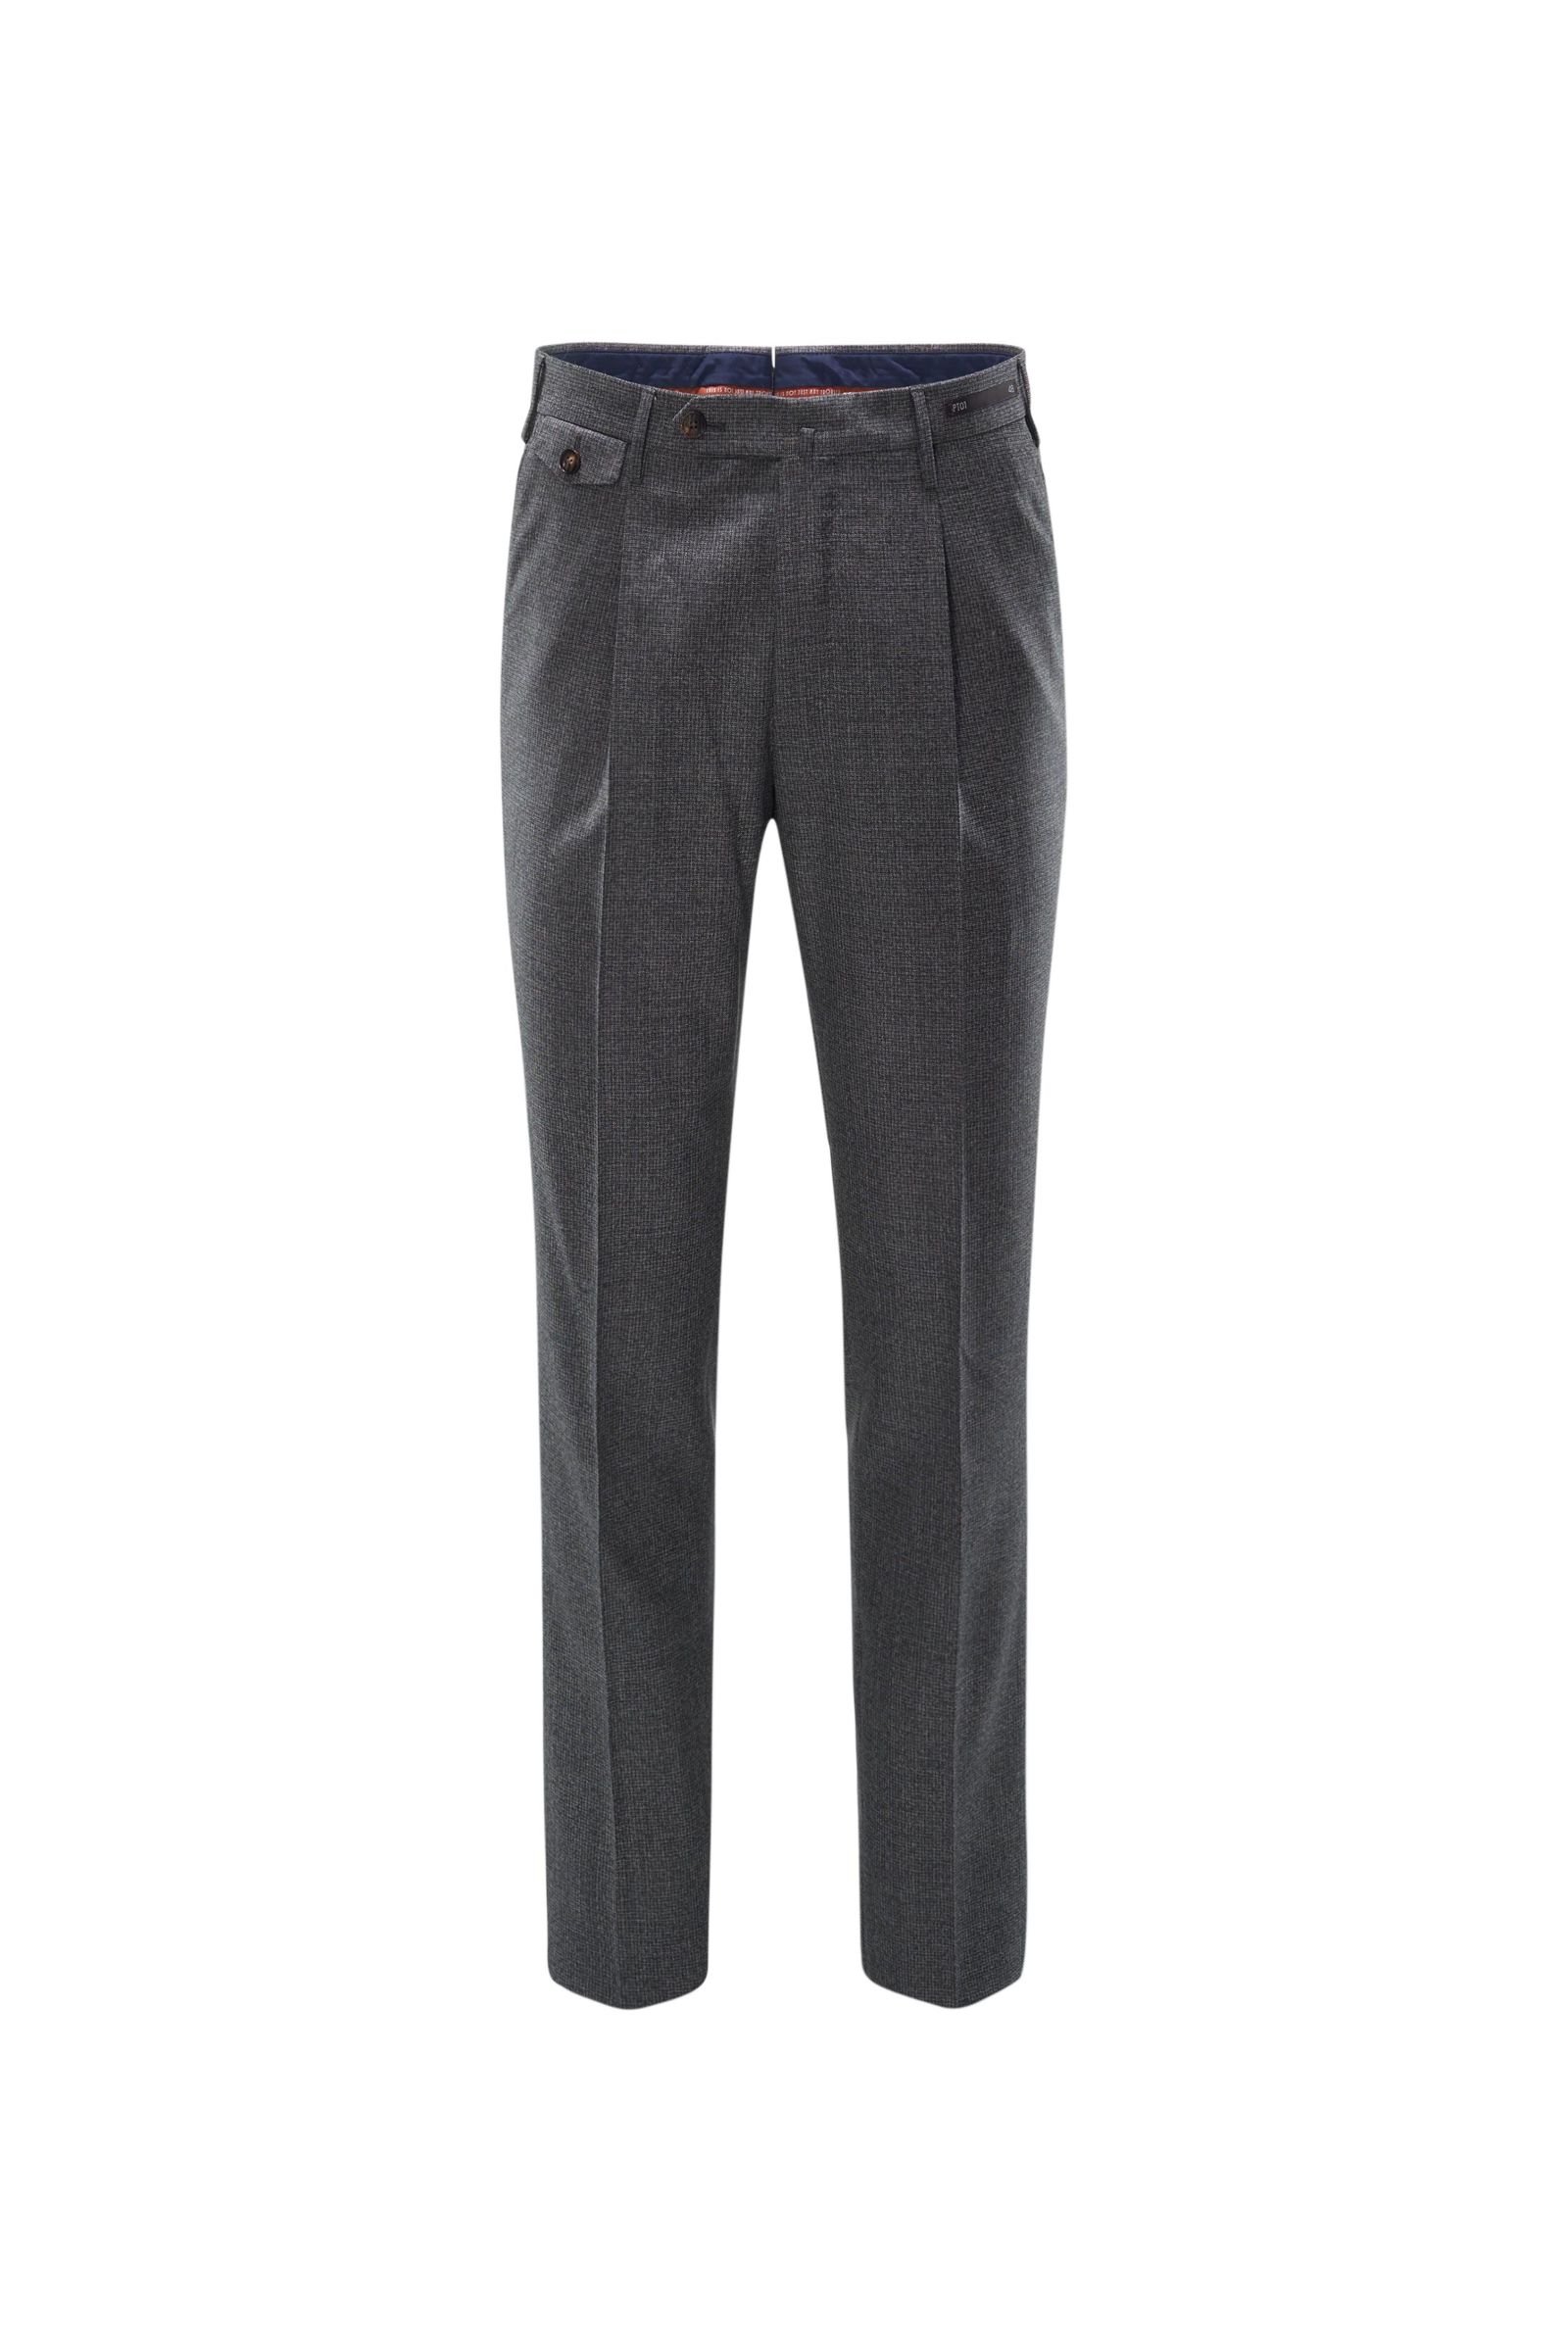 Wool trousers 'Gentleman Fit' grey patterned